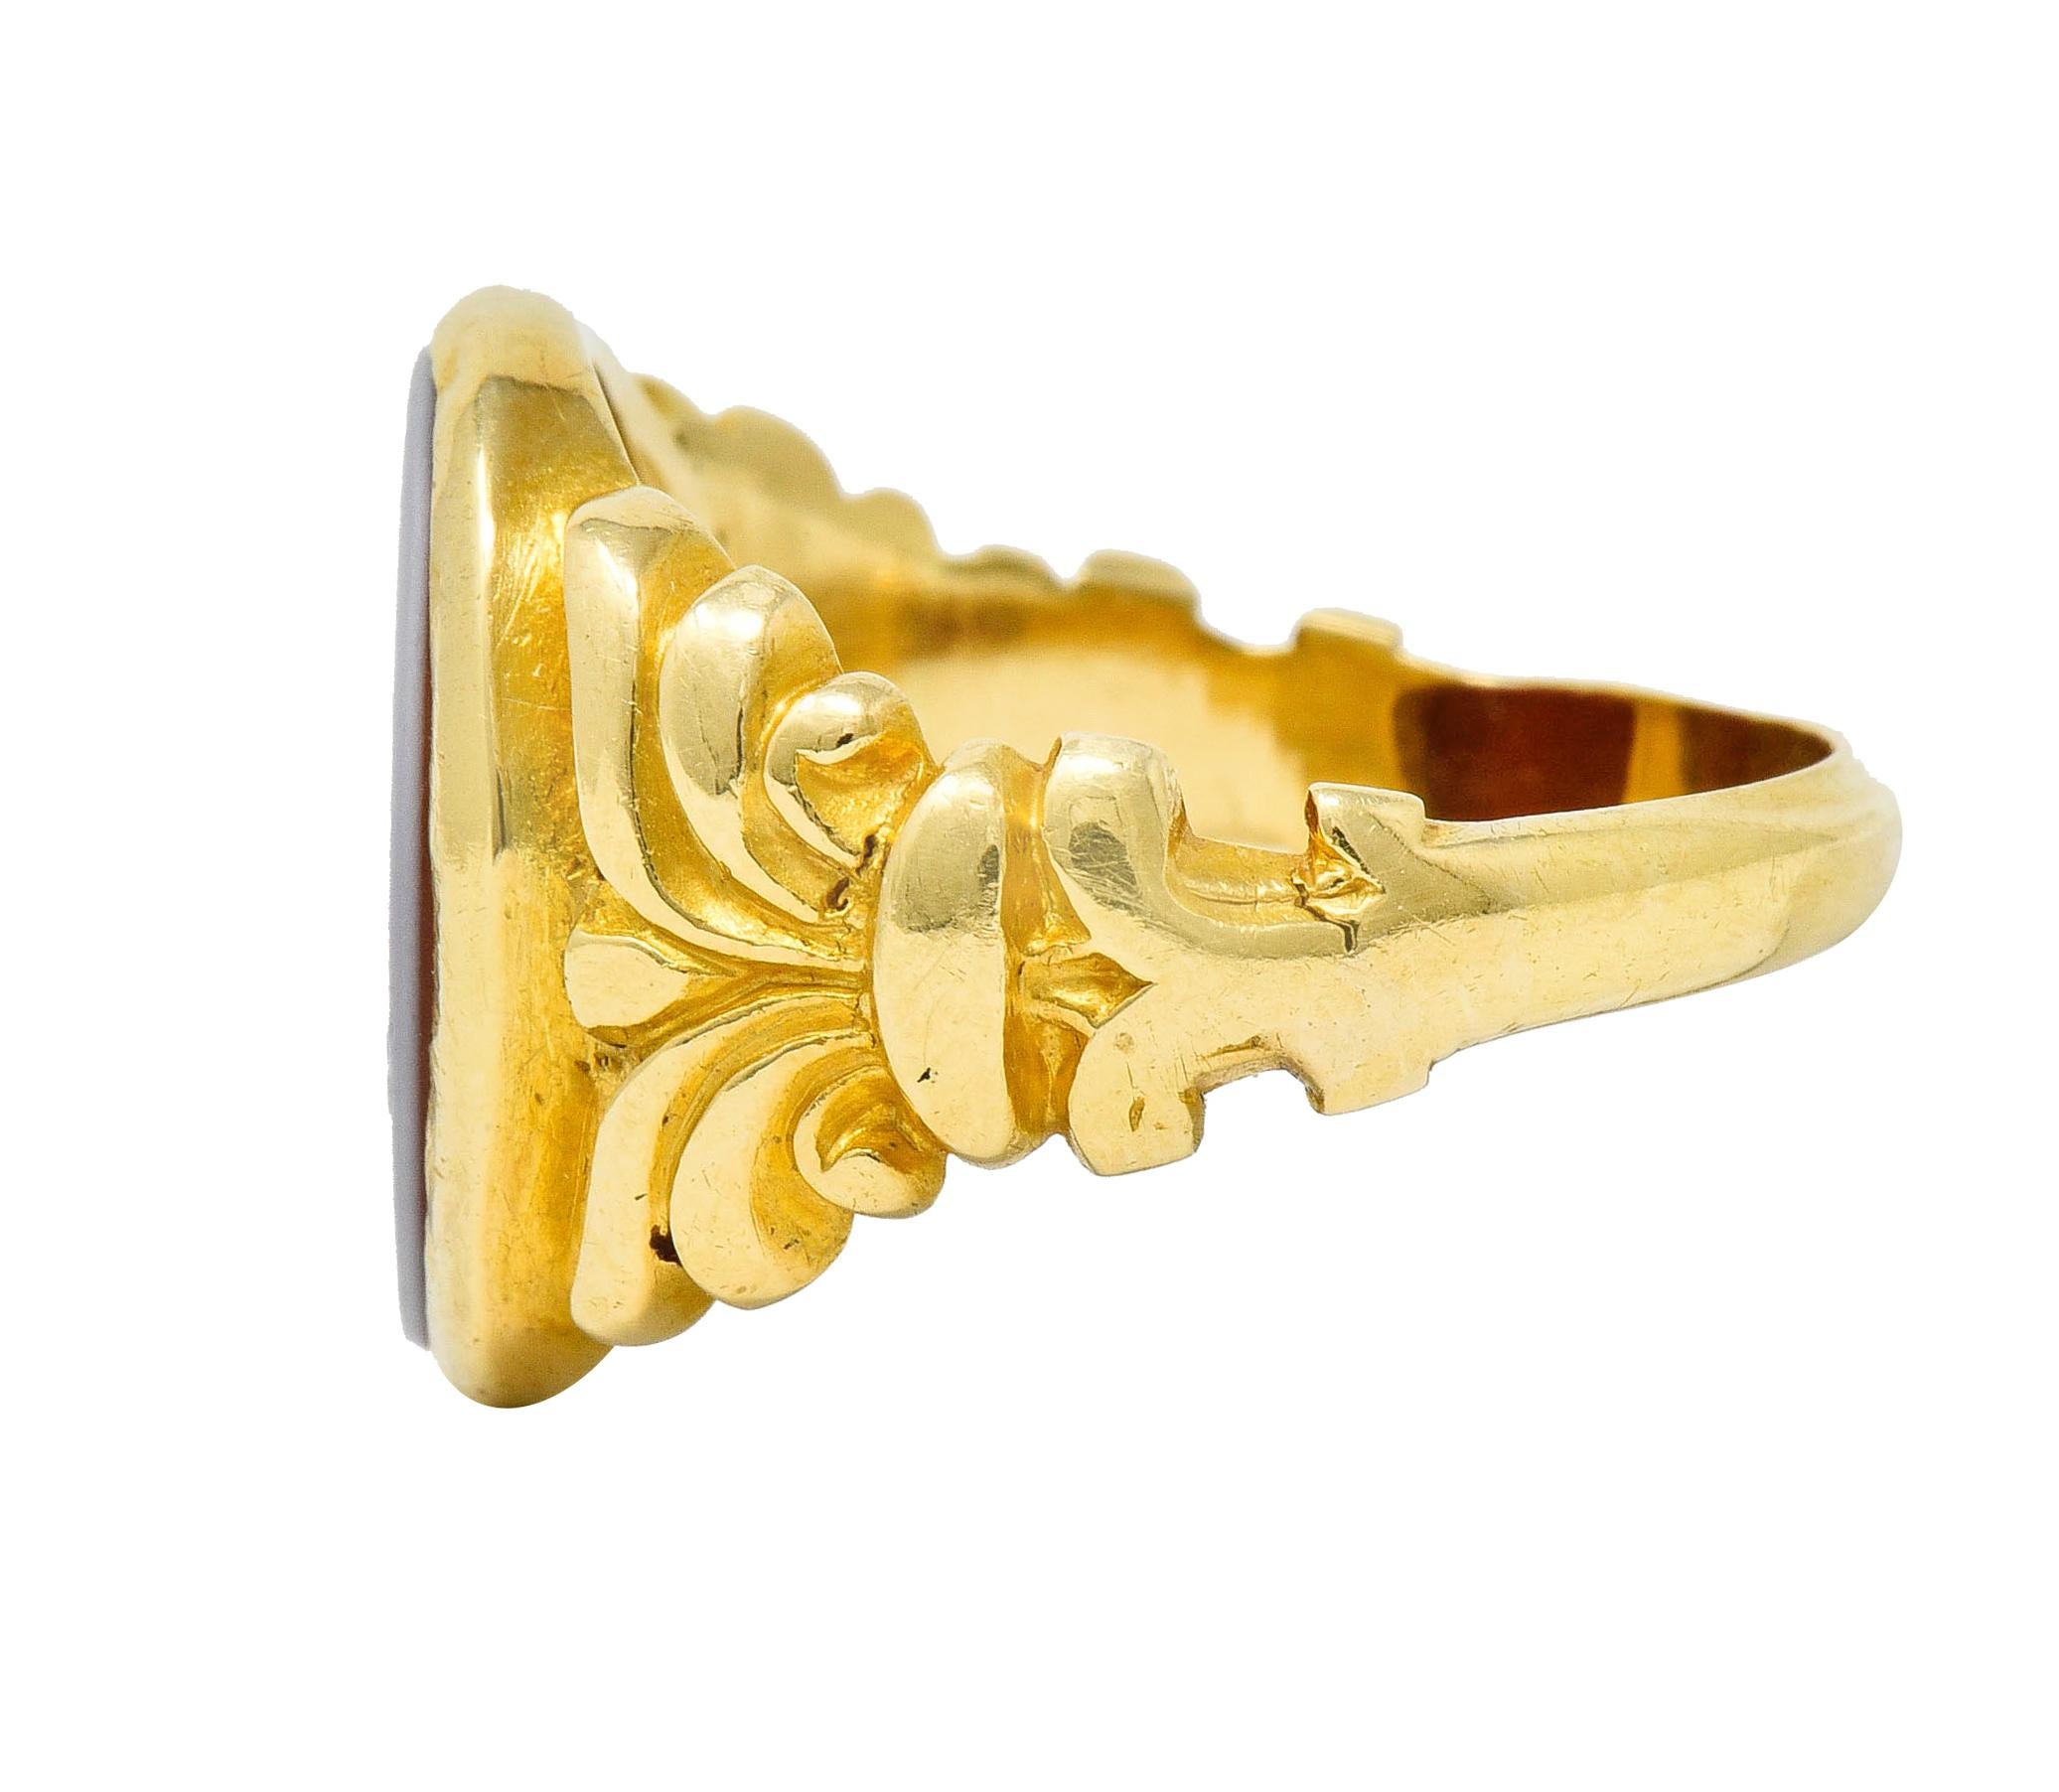 Oval Cut Art Nouveau Hardstone Intaglio 18 Karat Gold Griffin Signet Ring